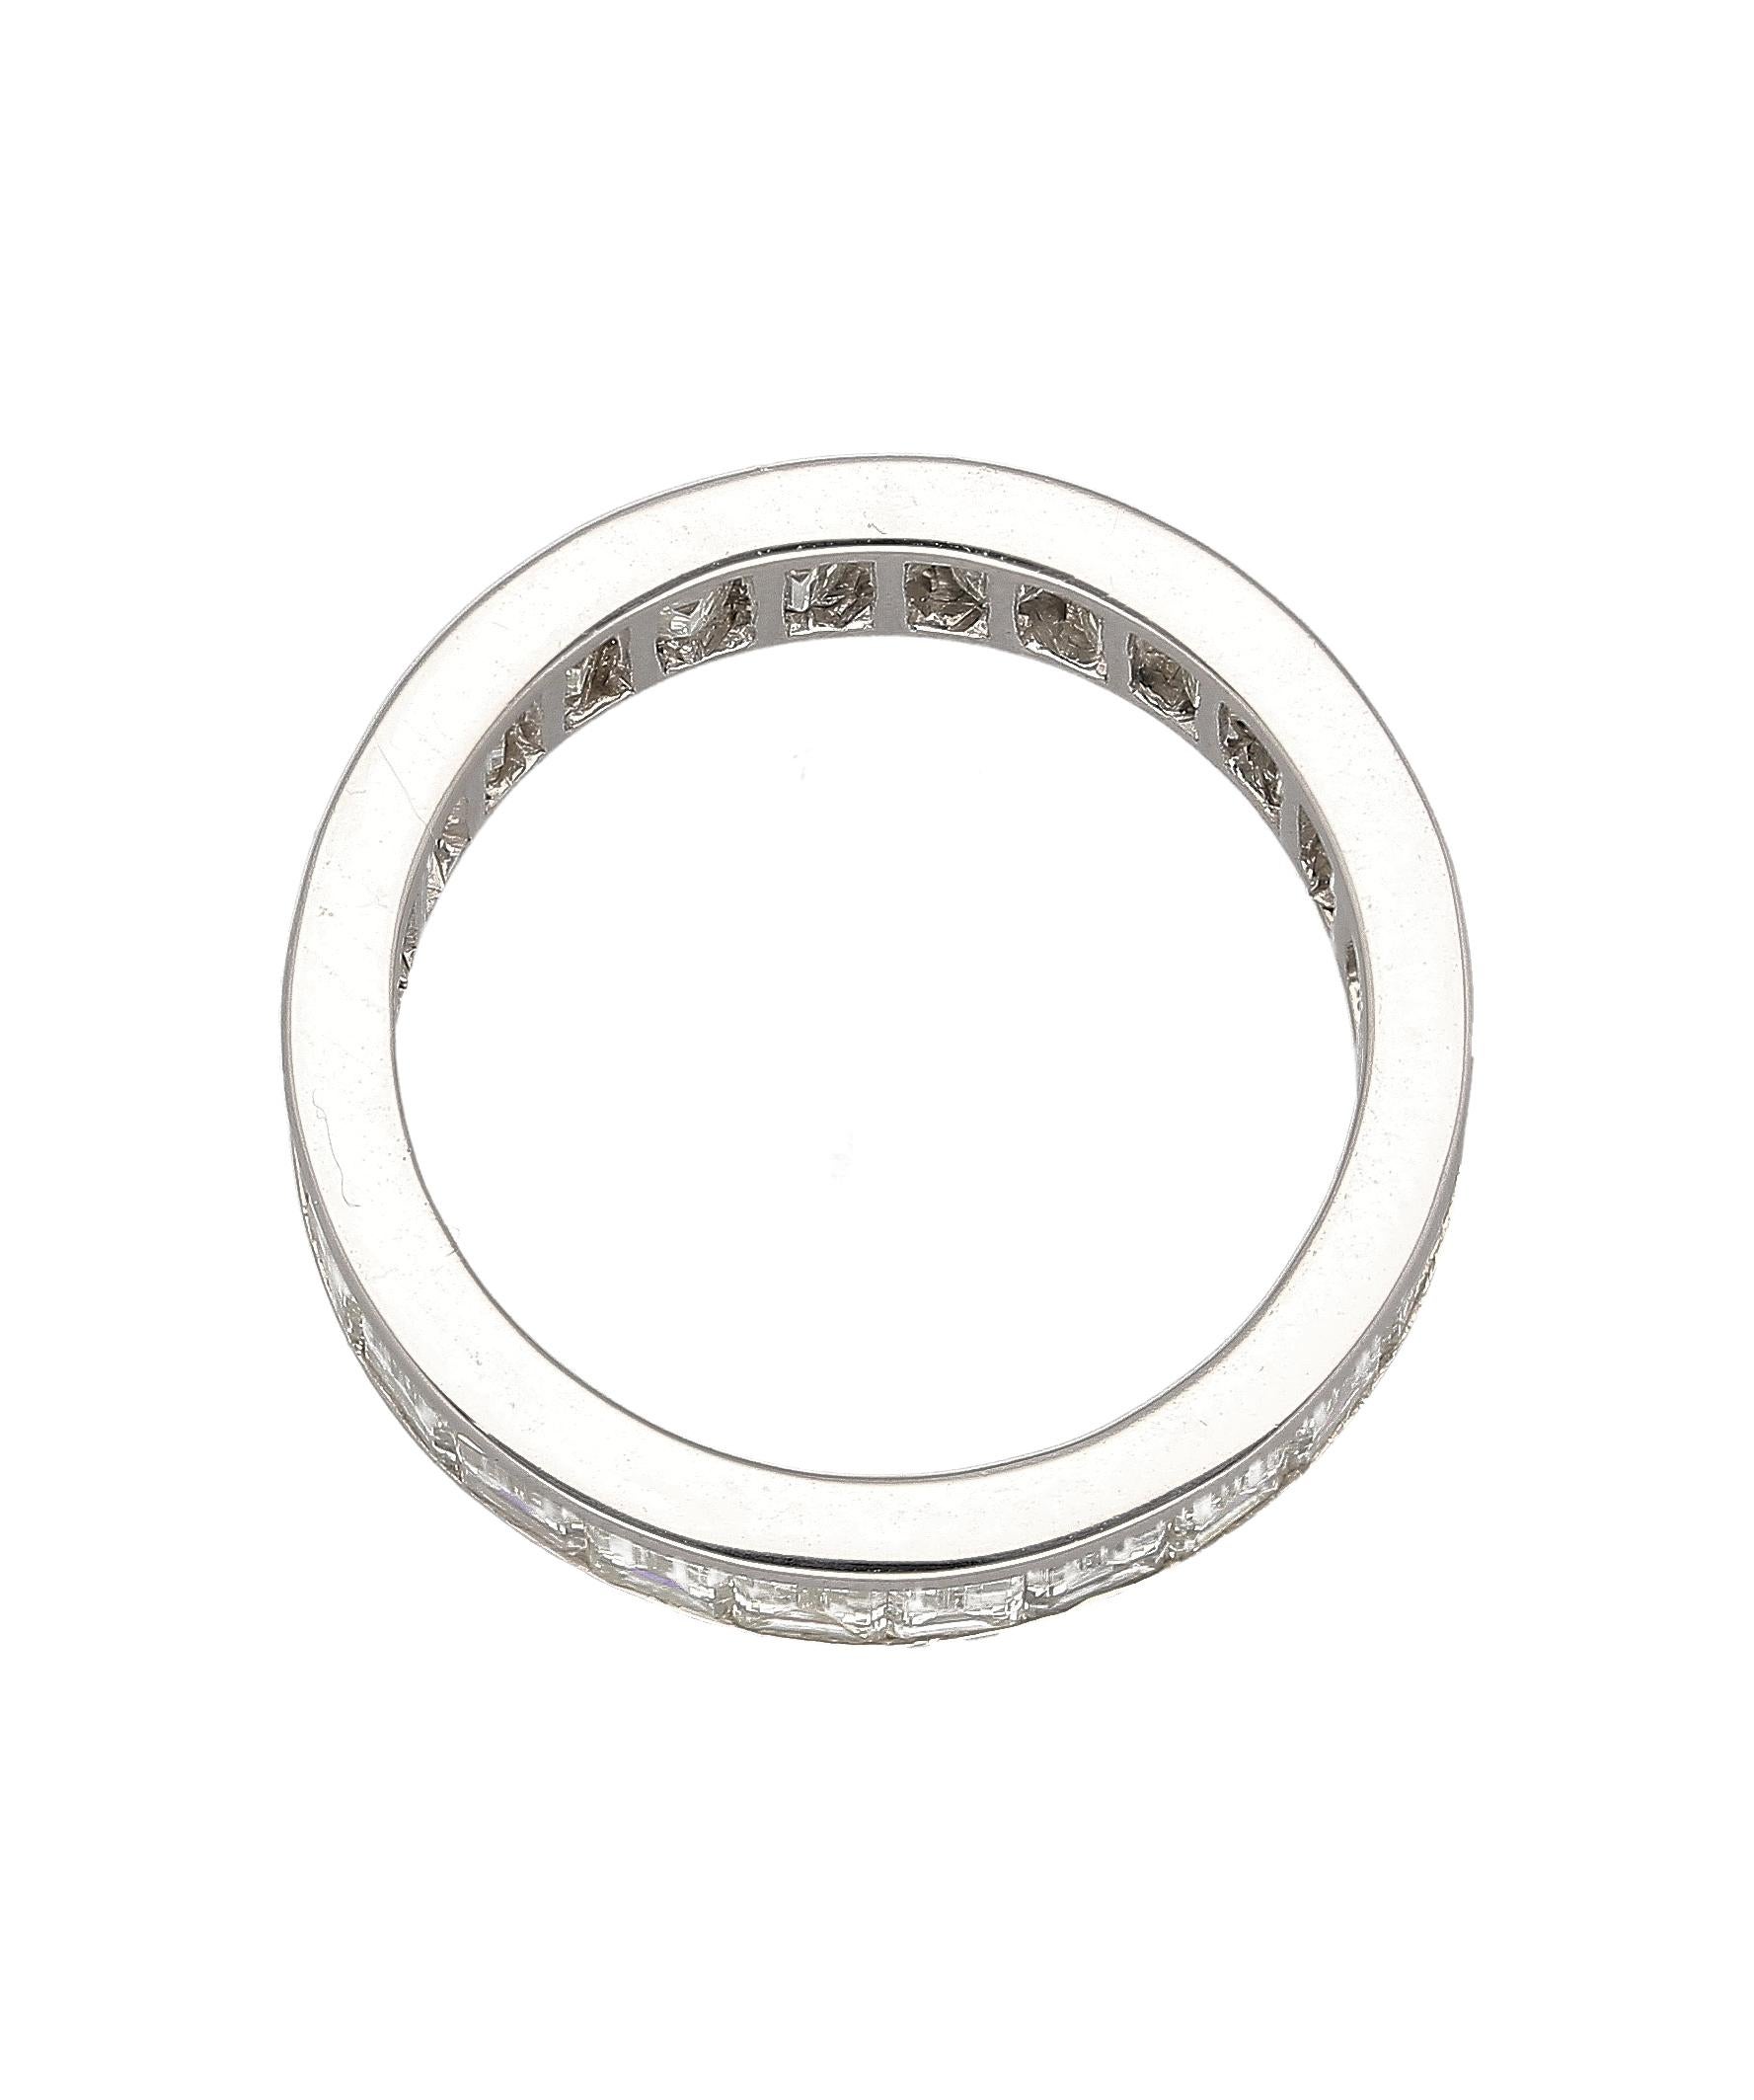 Women's or Men's 4 Carat Channel Set Baguette Cut Diamond Wedding Band Ring in Platinum 950 For Sale